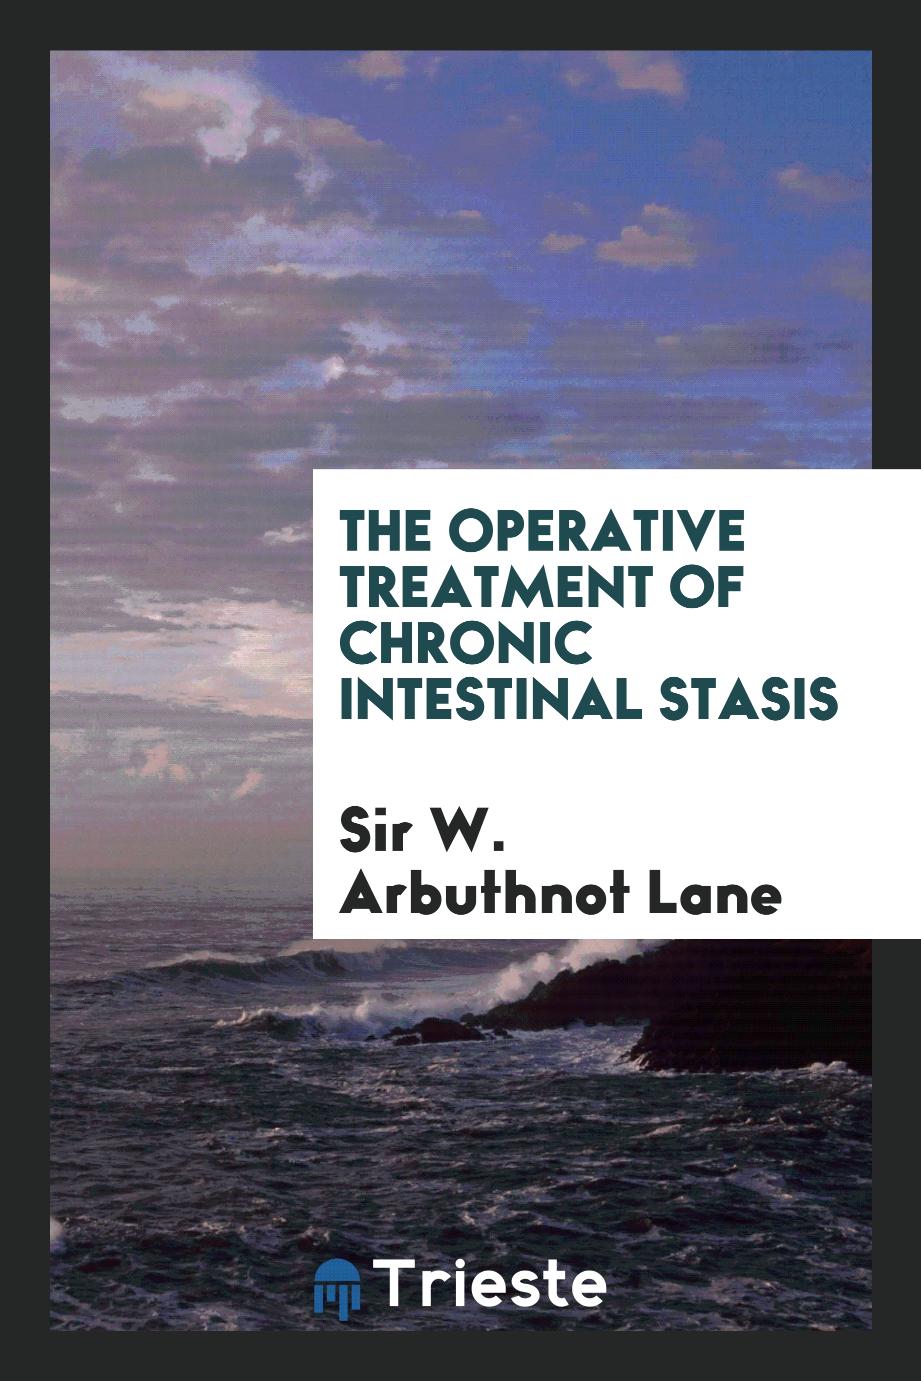 The operative treatment of chronic intestinal stasis